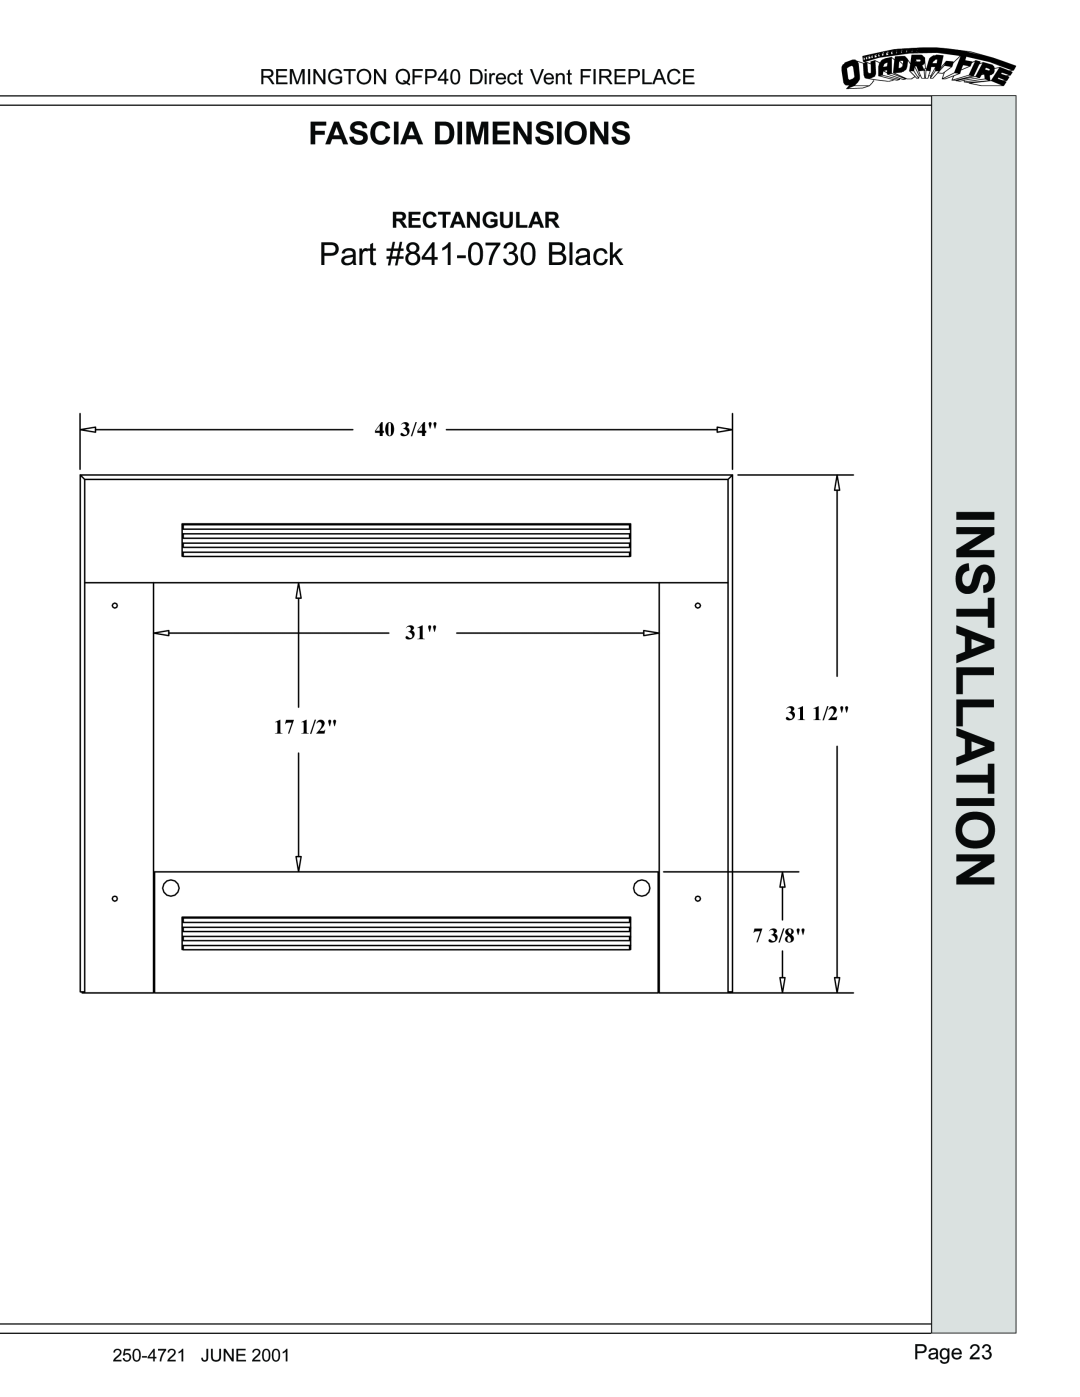 Remington QFP40 manual 841-0730Black, Installation, Rectangular, Fascia Dimensions 